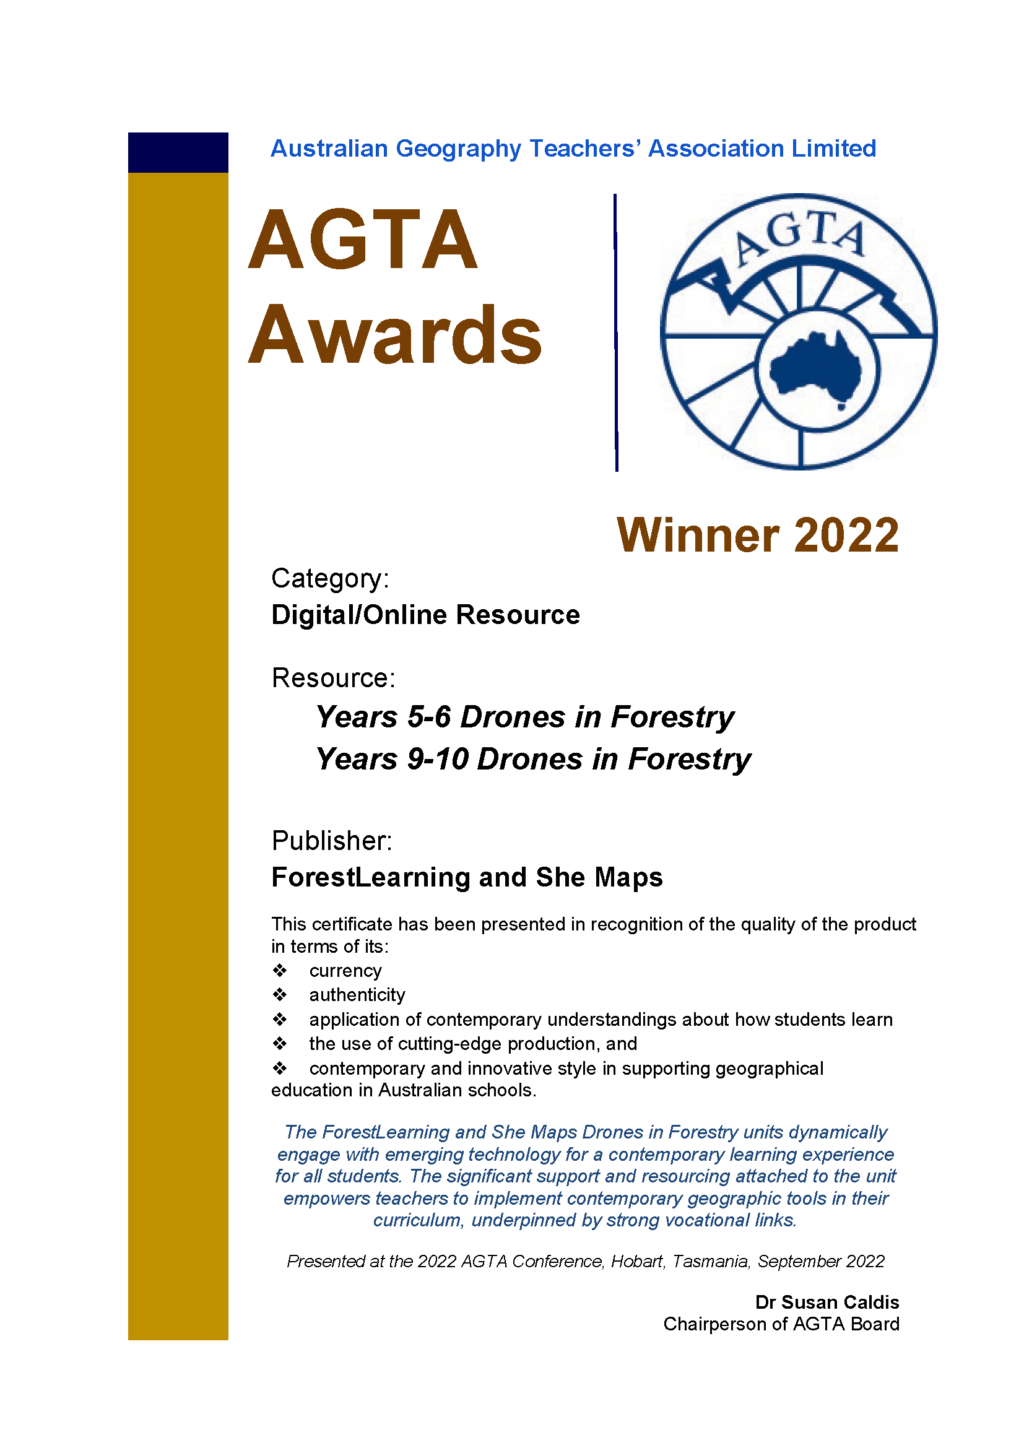 AGTA Award digital resource winner 2022